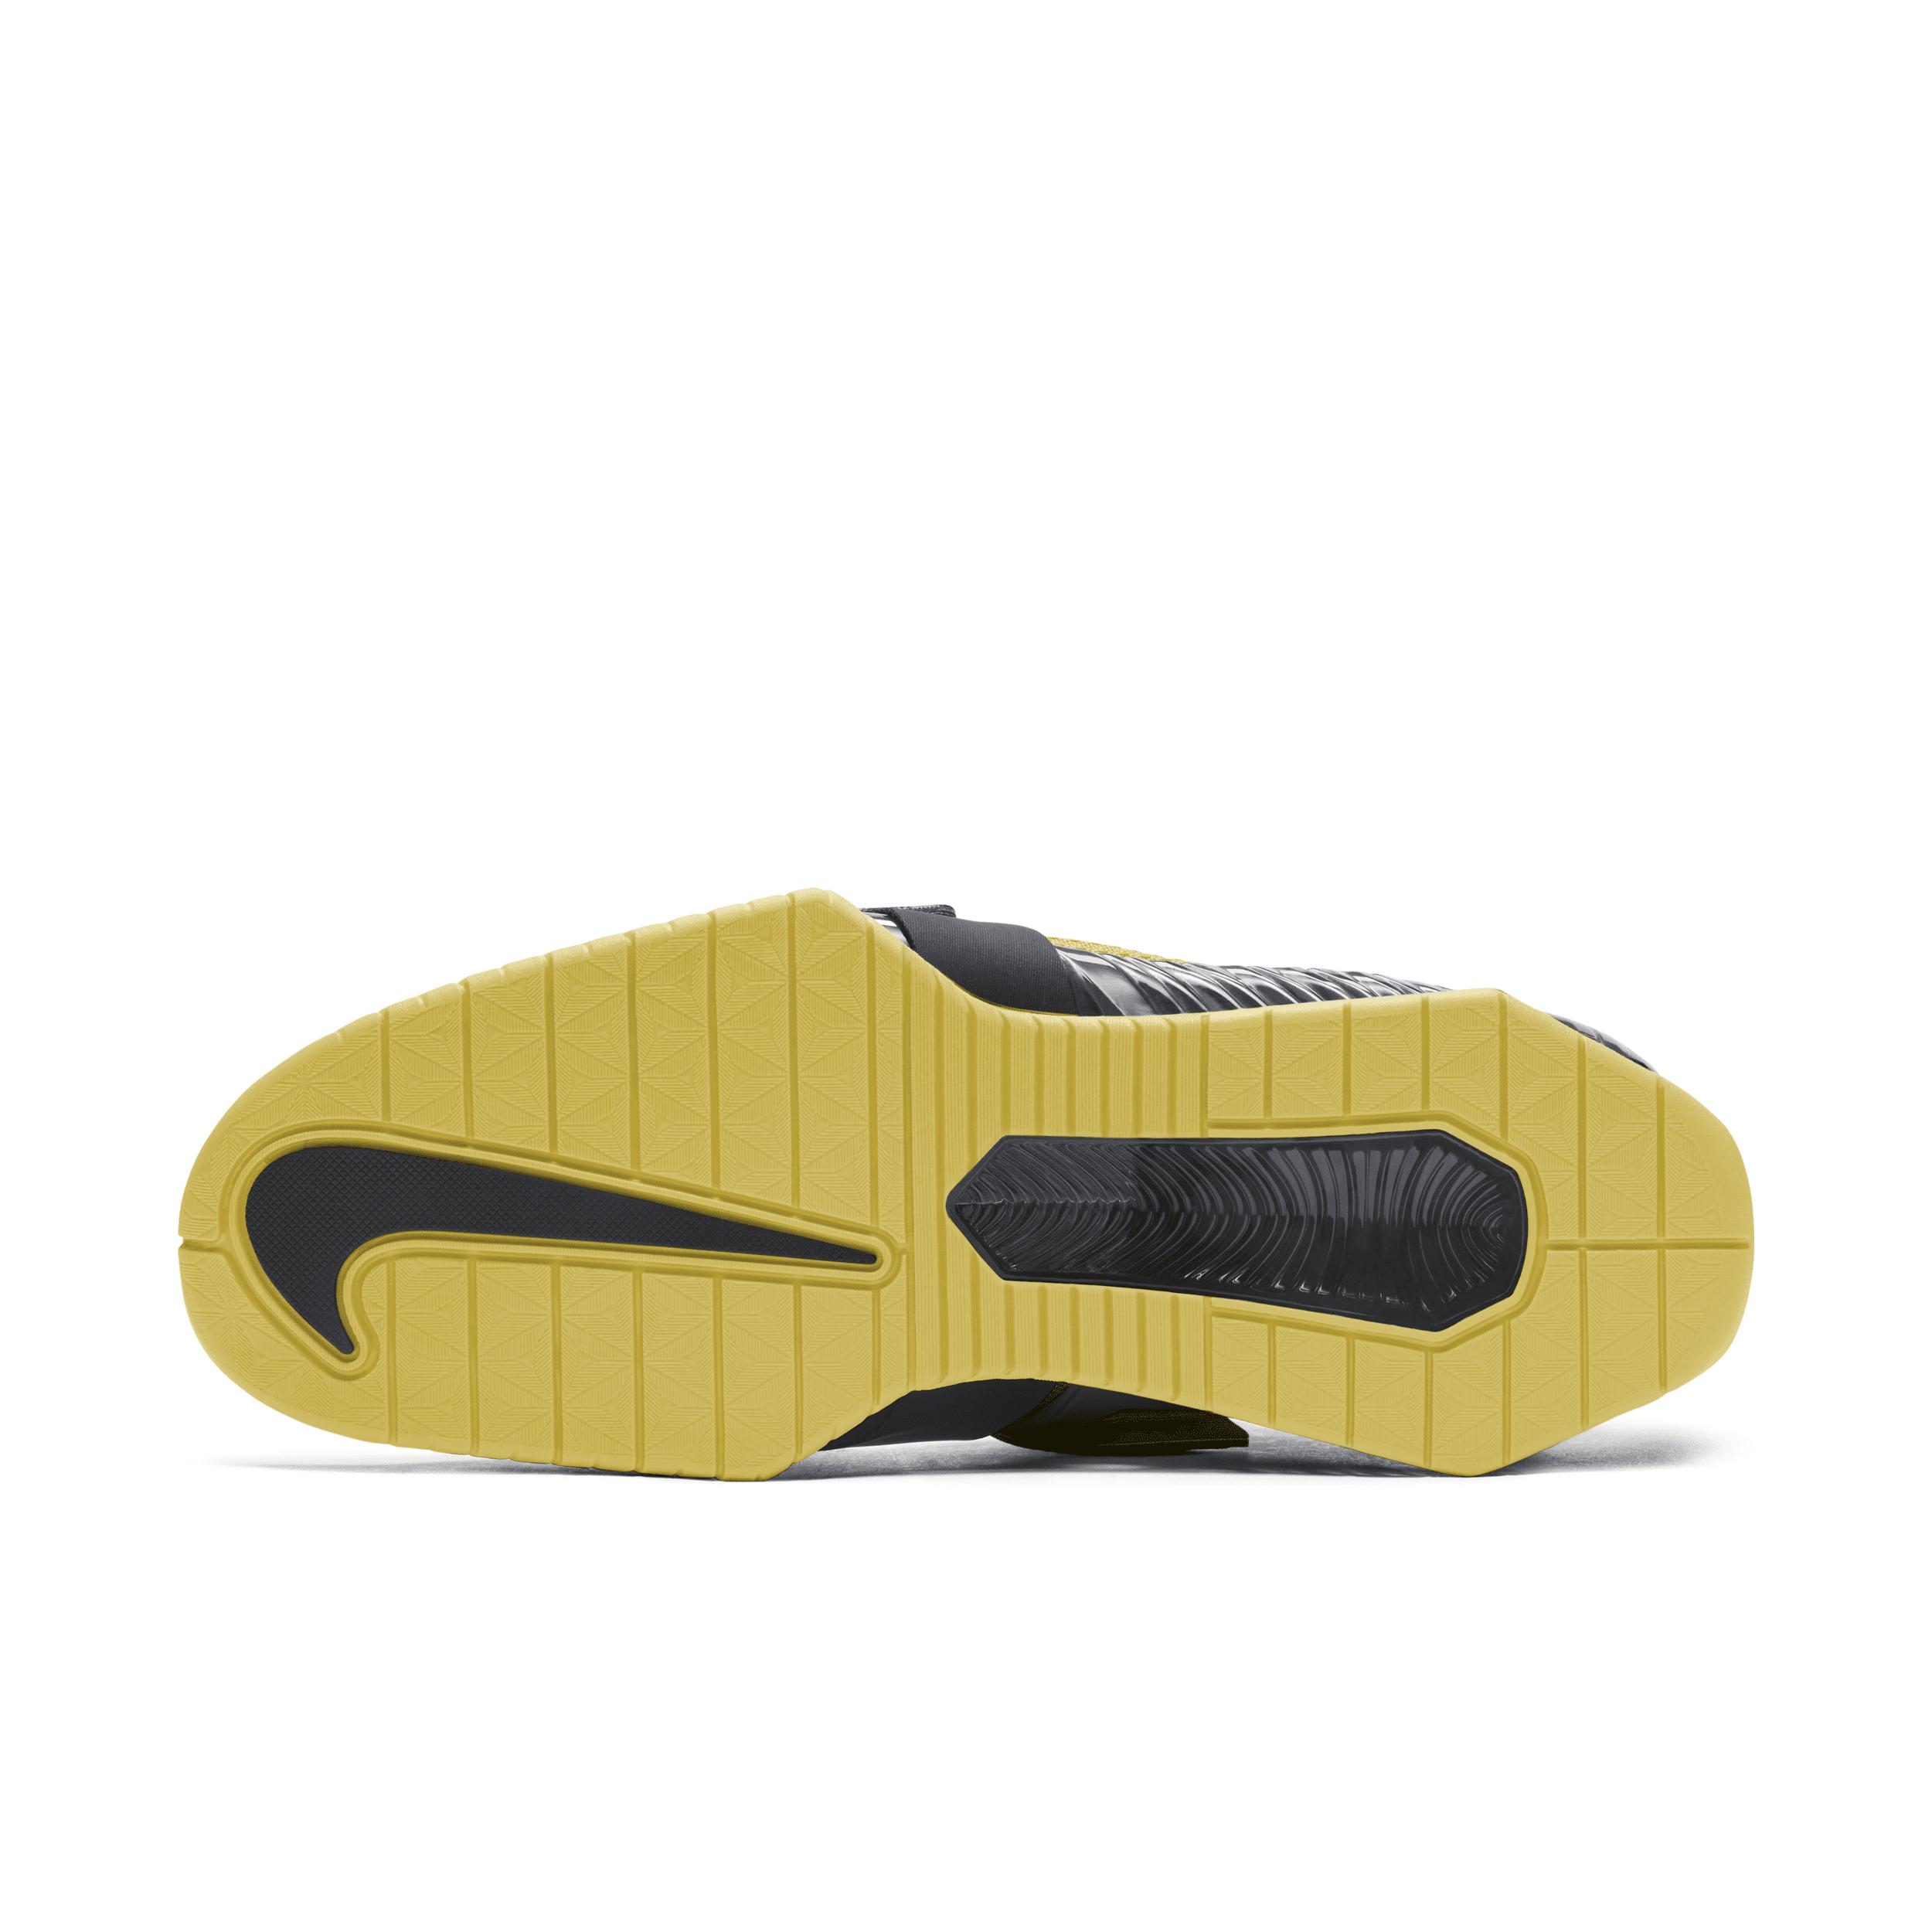 Nike Romaleos 4 Training Shoe Yellow | Lyst